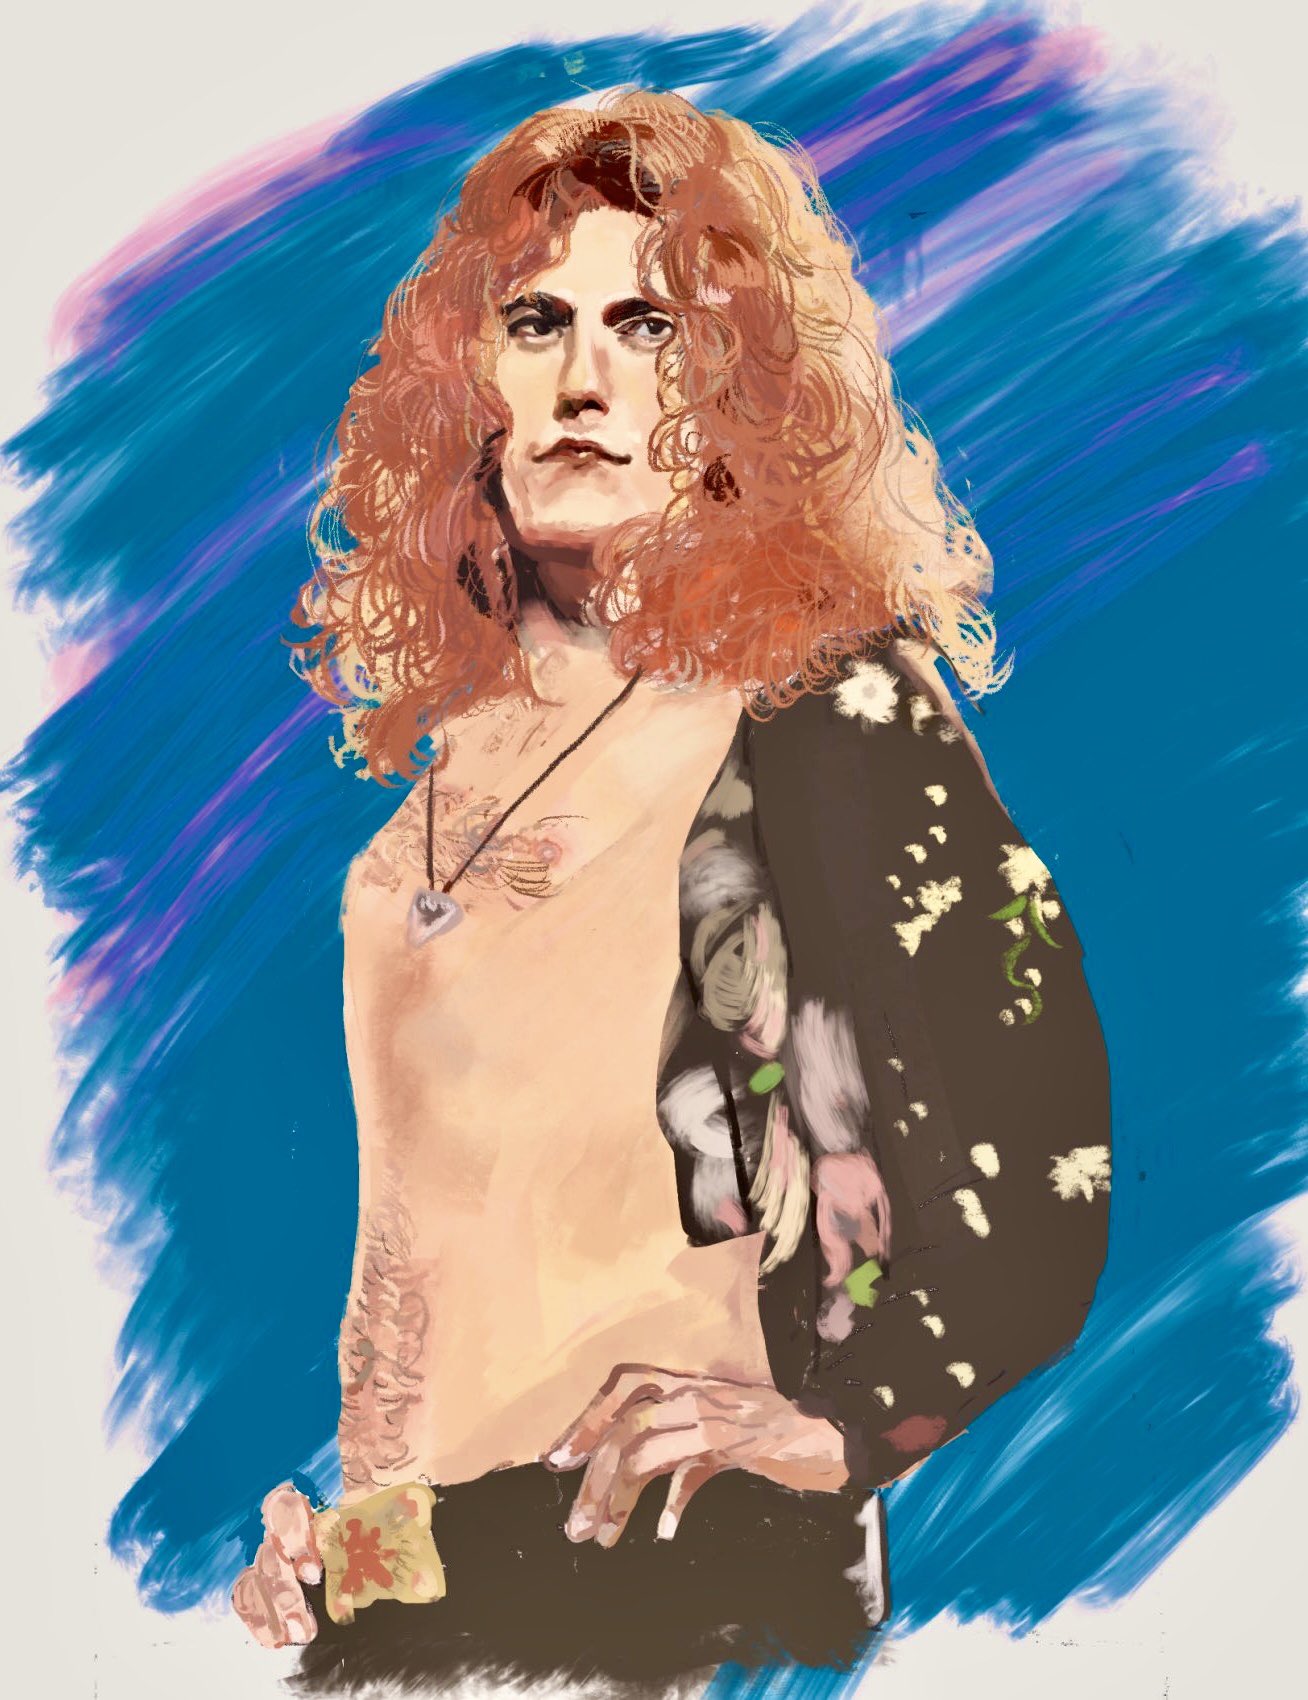                  ...     Happy Birthday Robert Plant                            